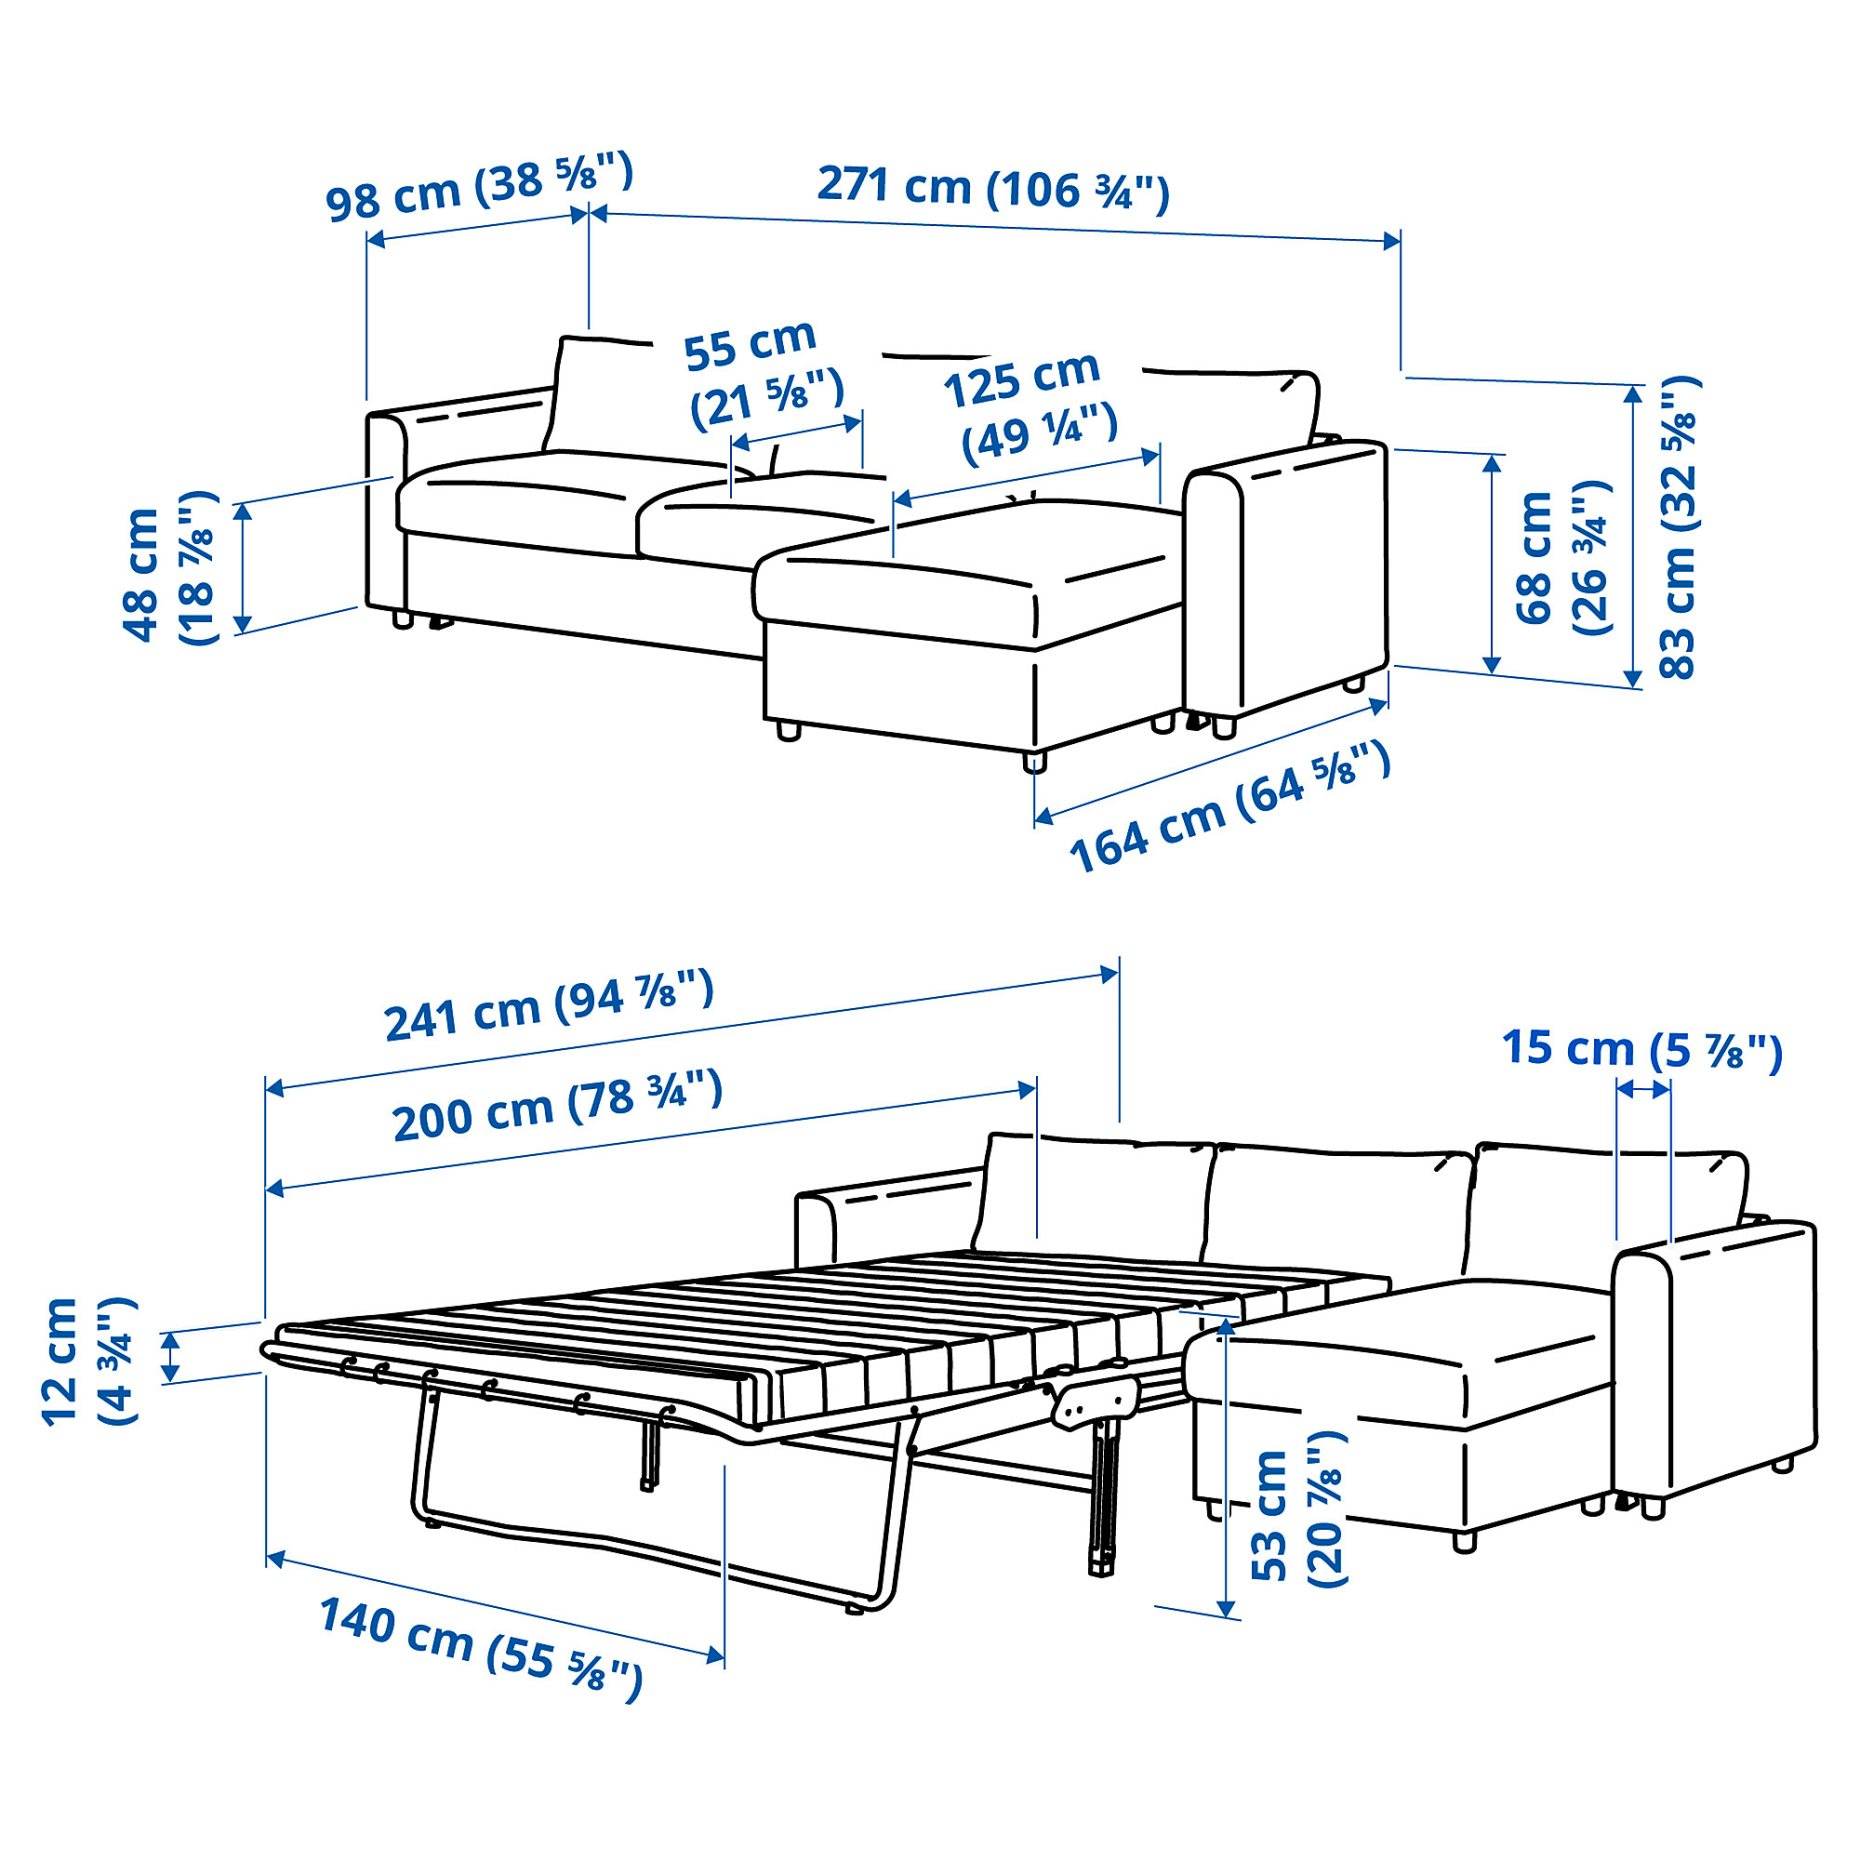 VIMLE, τριθέσιος καναπές-κρεβάτι με σεζλόνγκ, 995.372.19